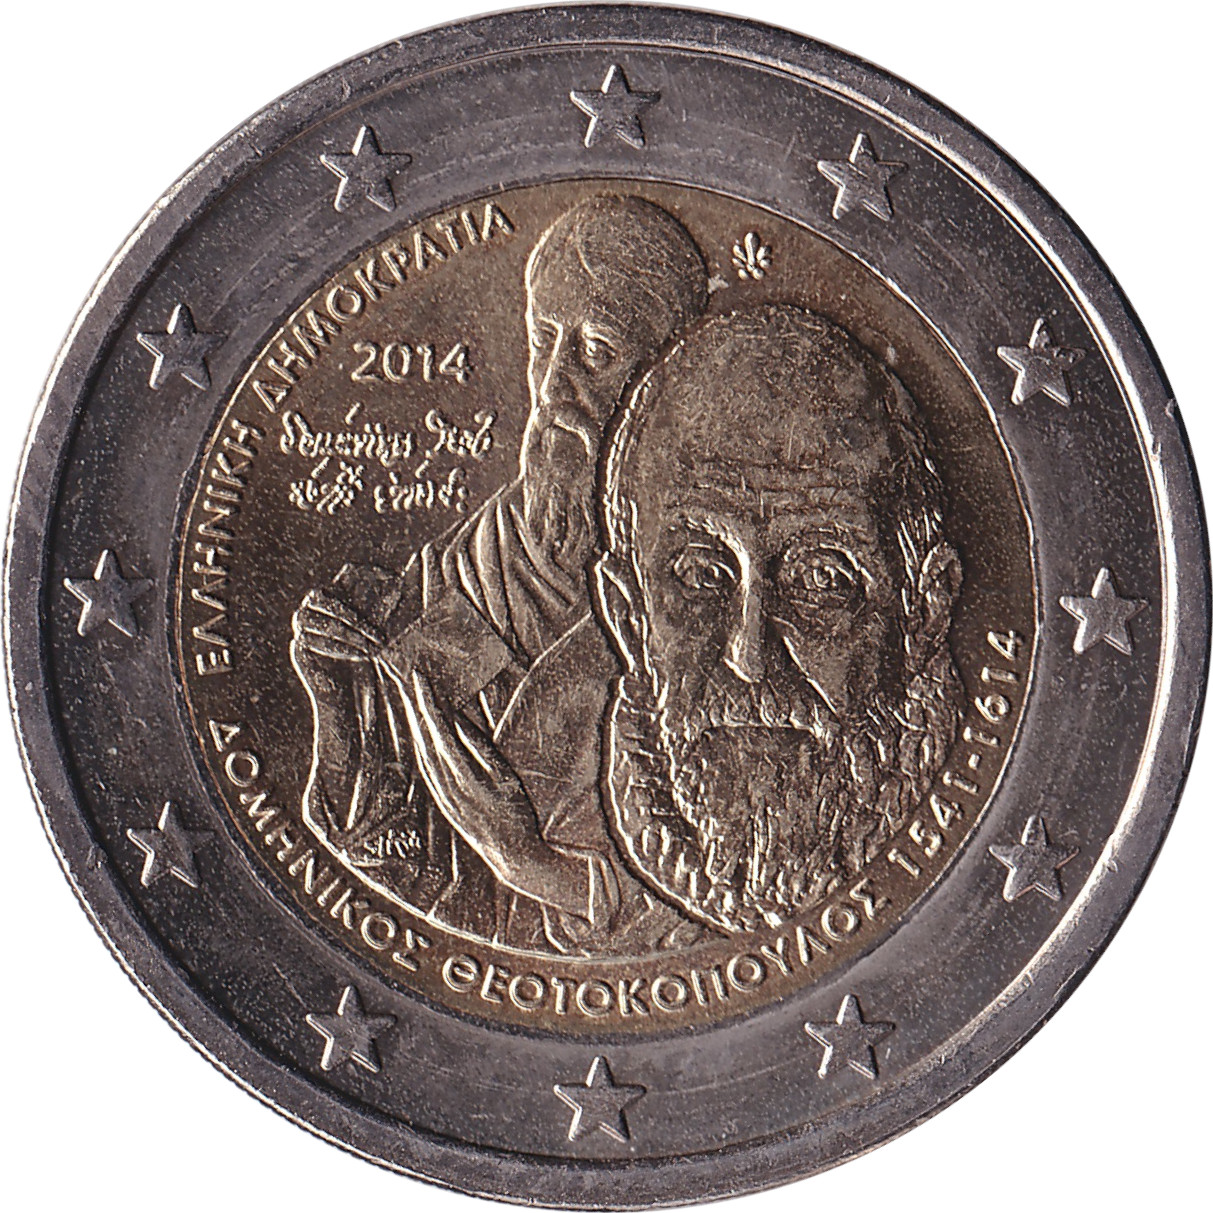 2 euro - Domínikos Theotokópoulos